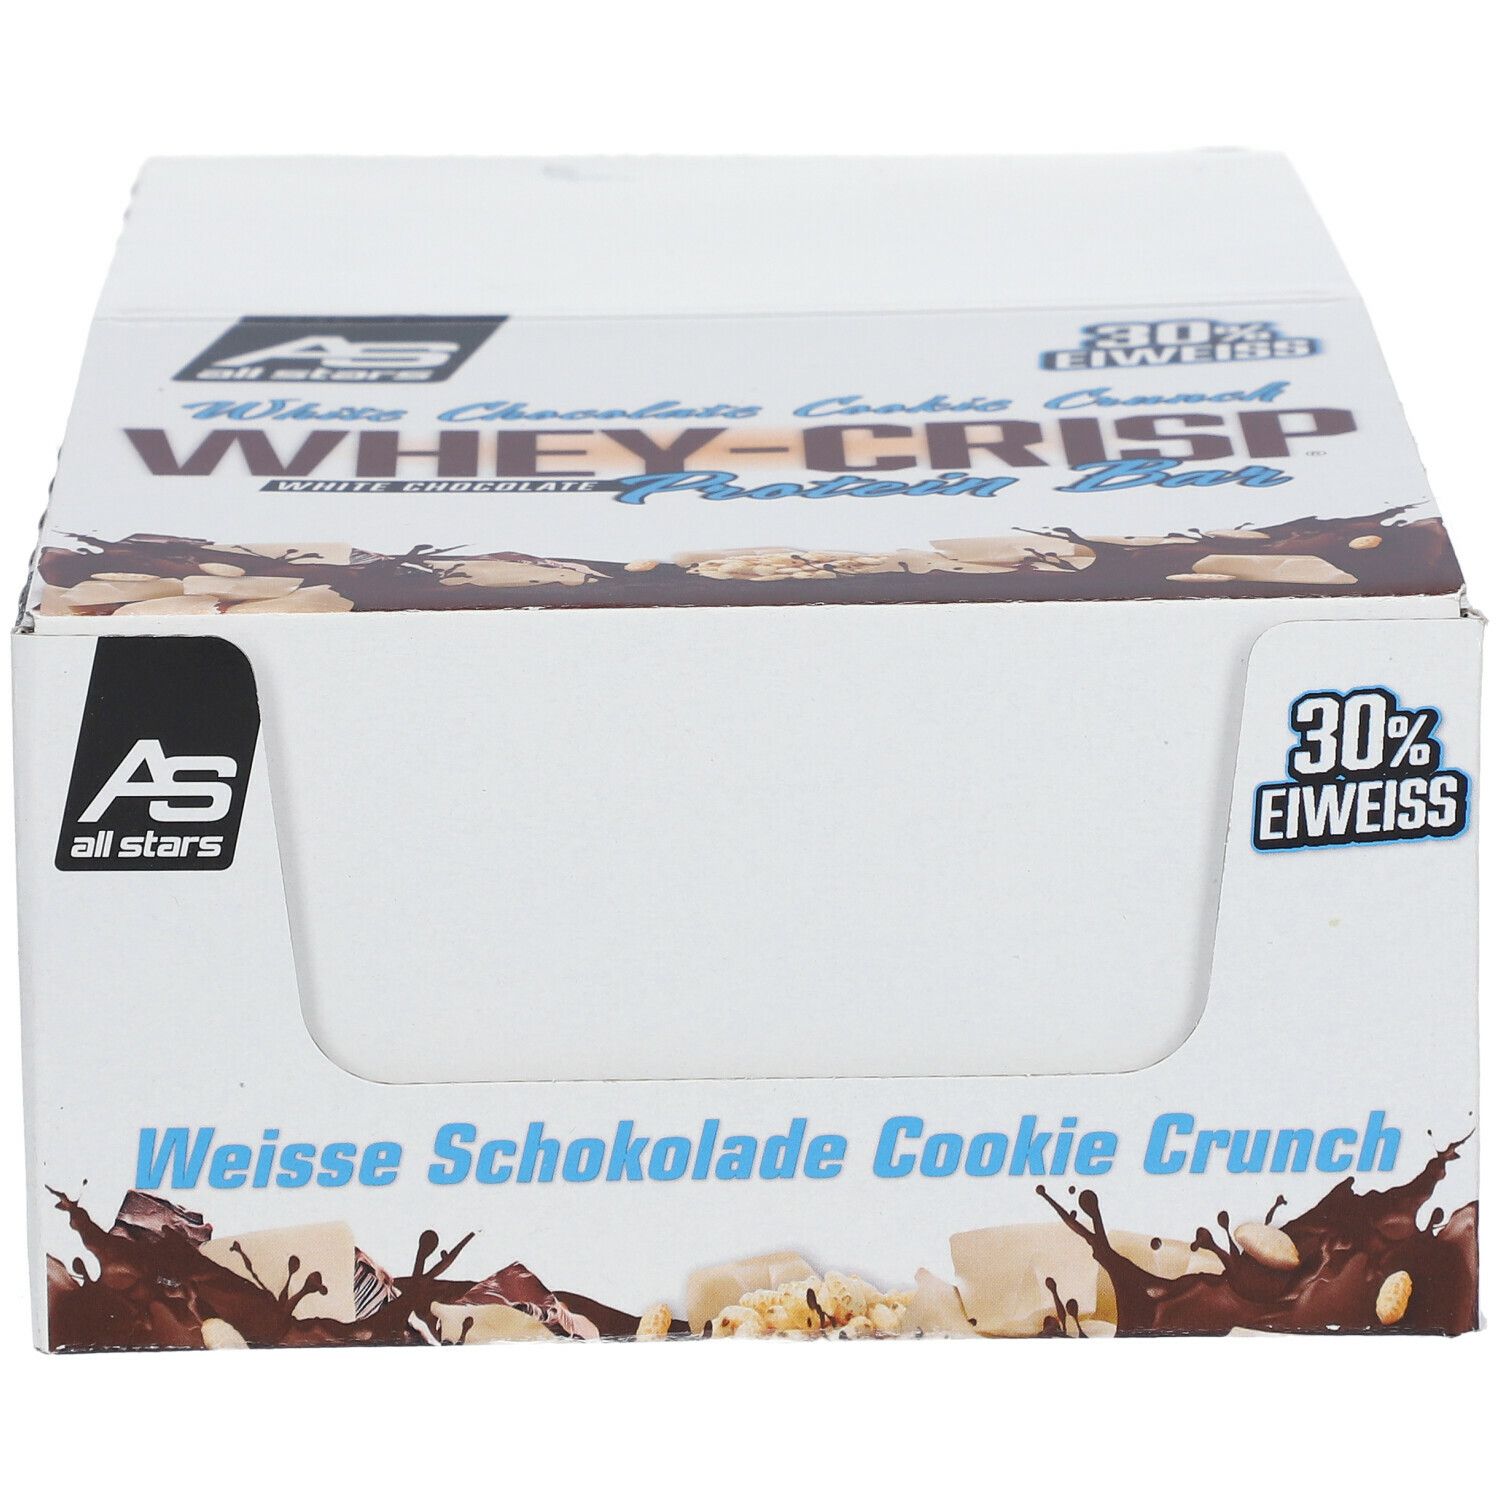 All Stars® Whey Crisp Protein Bar White Chocolate Cookie Crunch